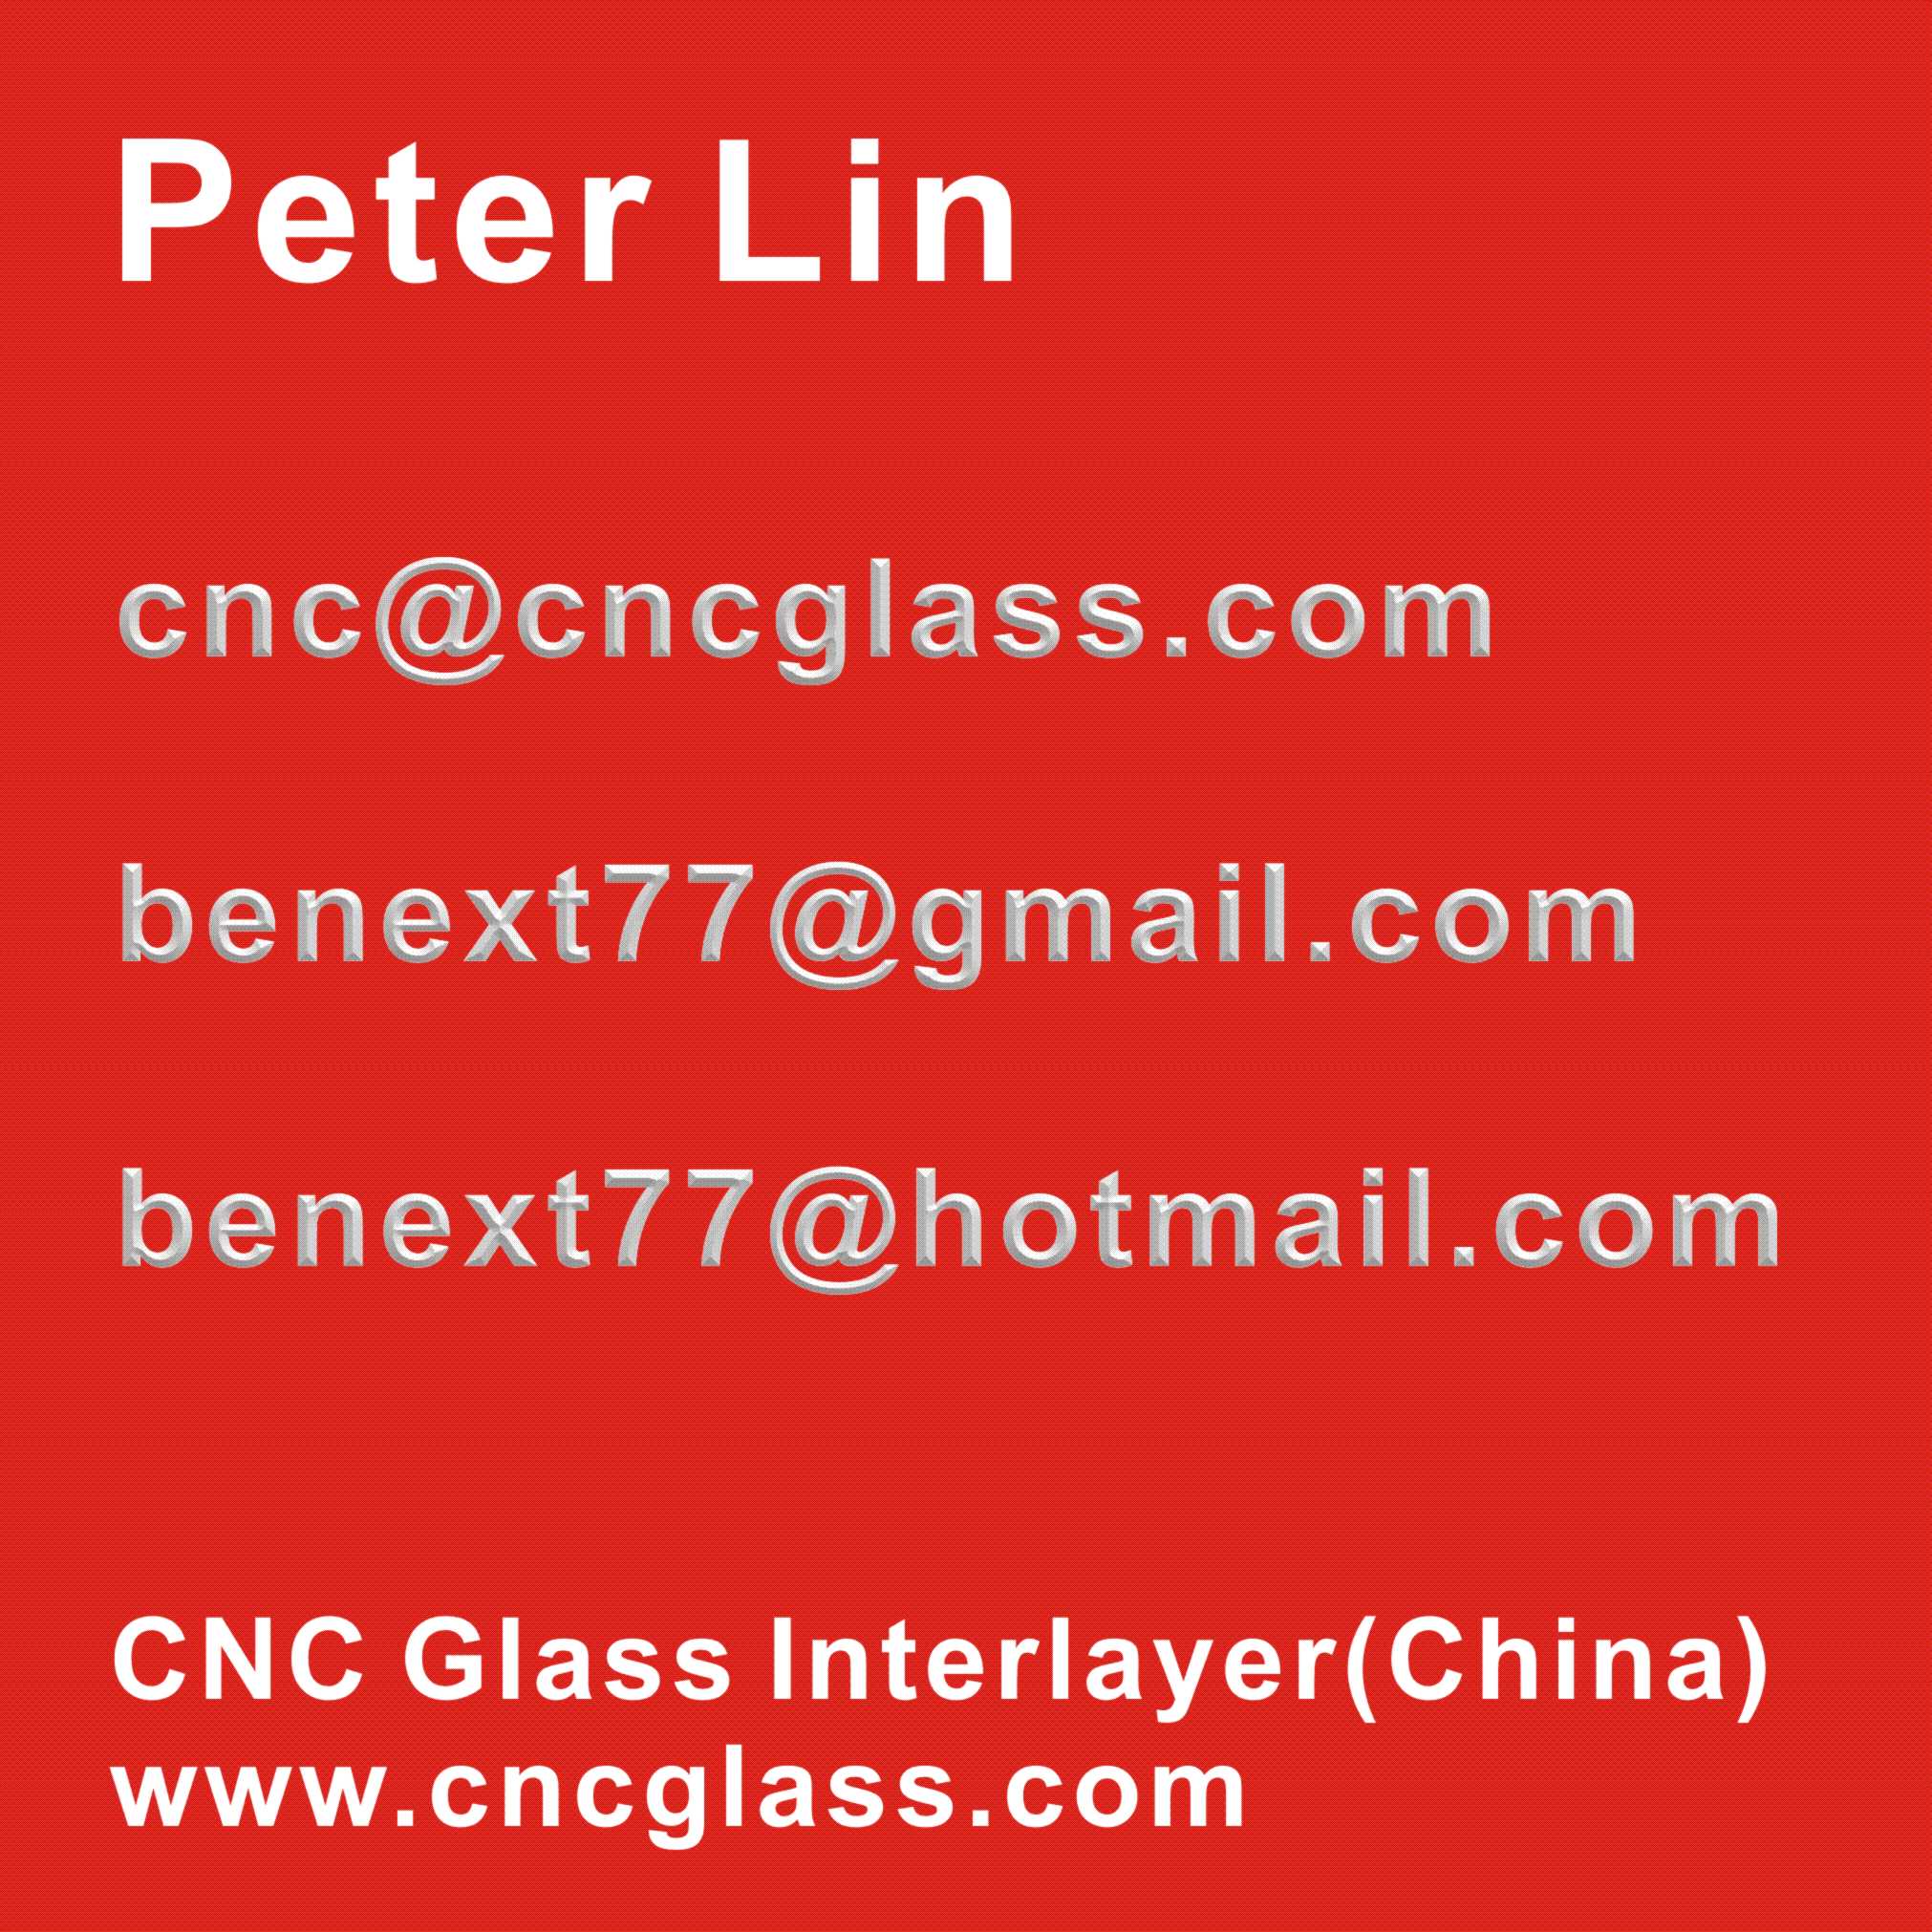 Contact CNC Glass